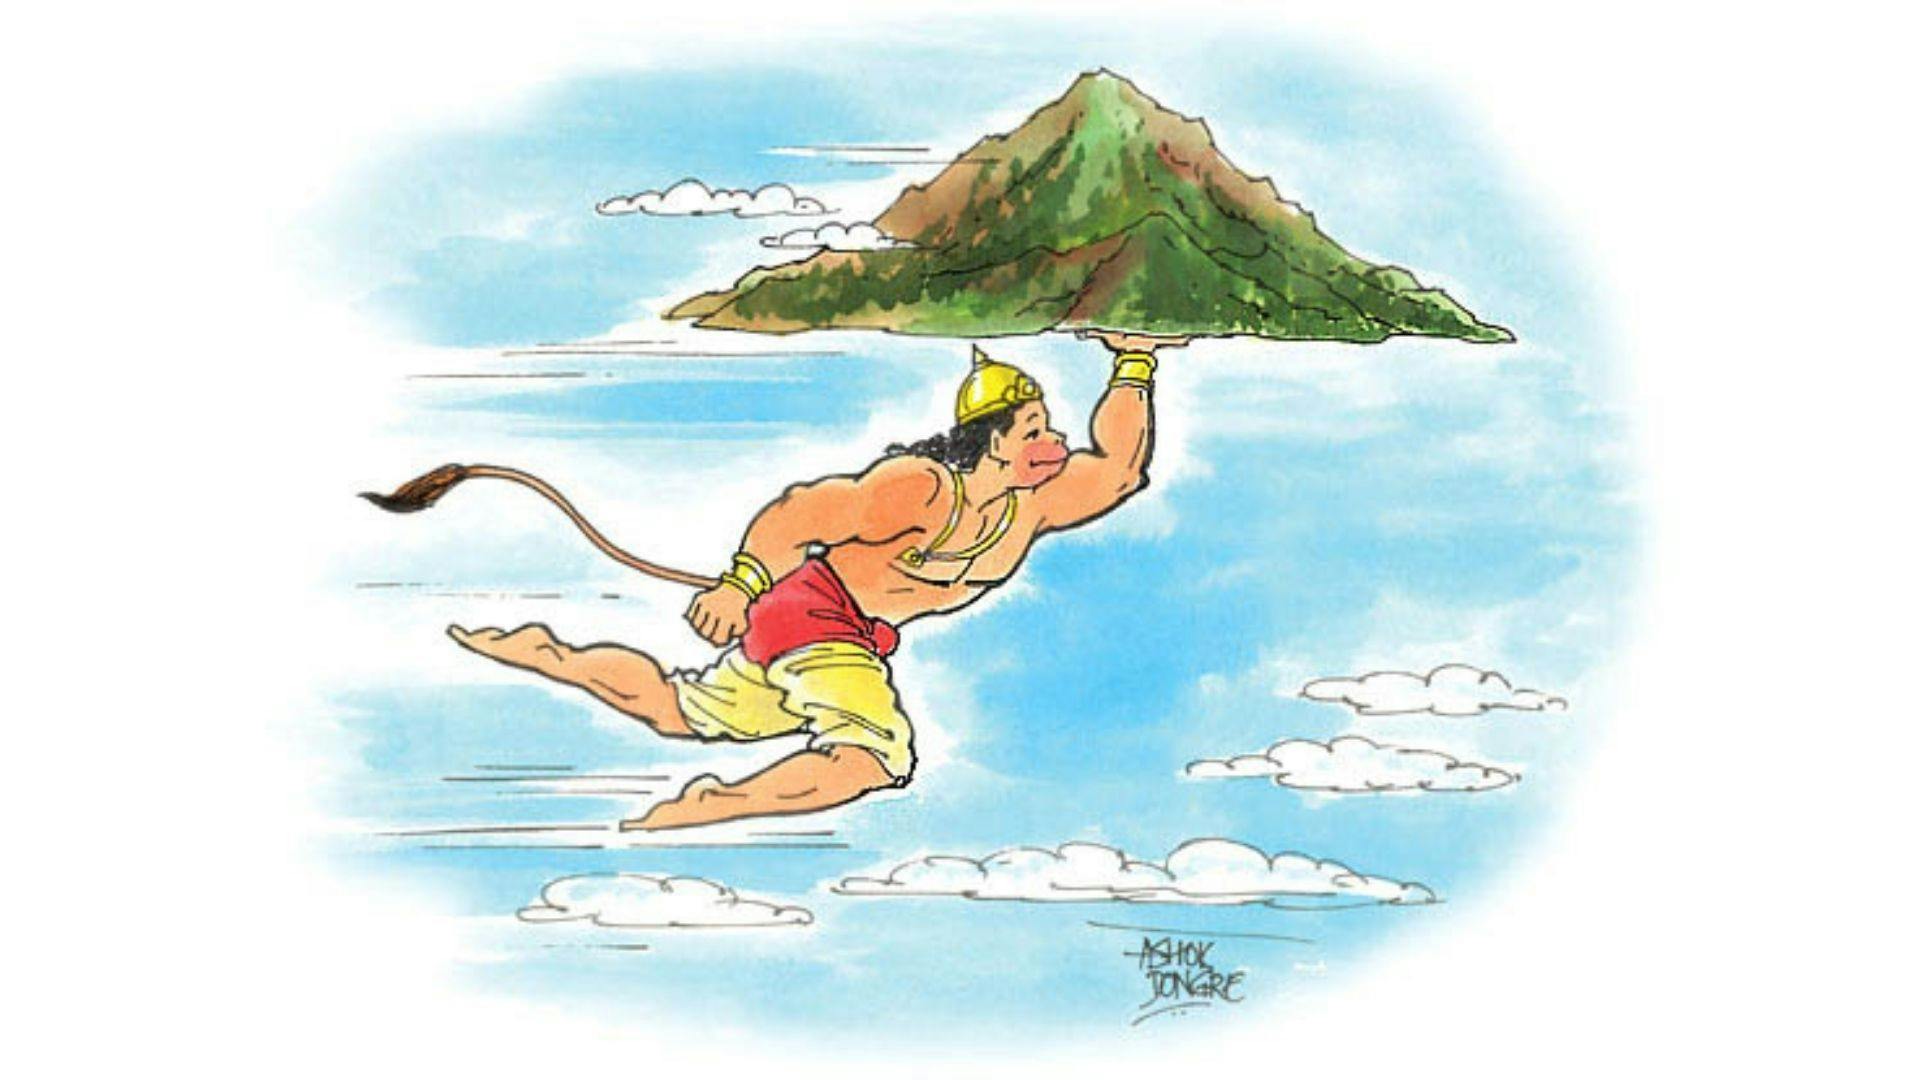 An illustration depicting Hanuman carrying the hillock